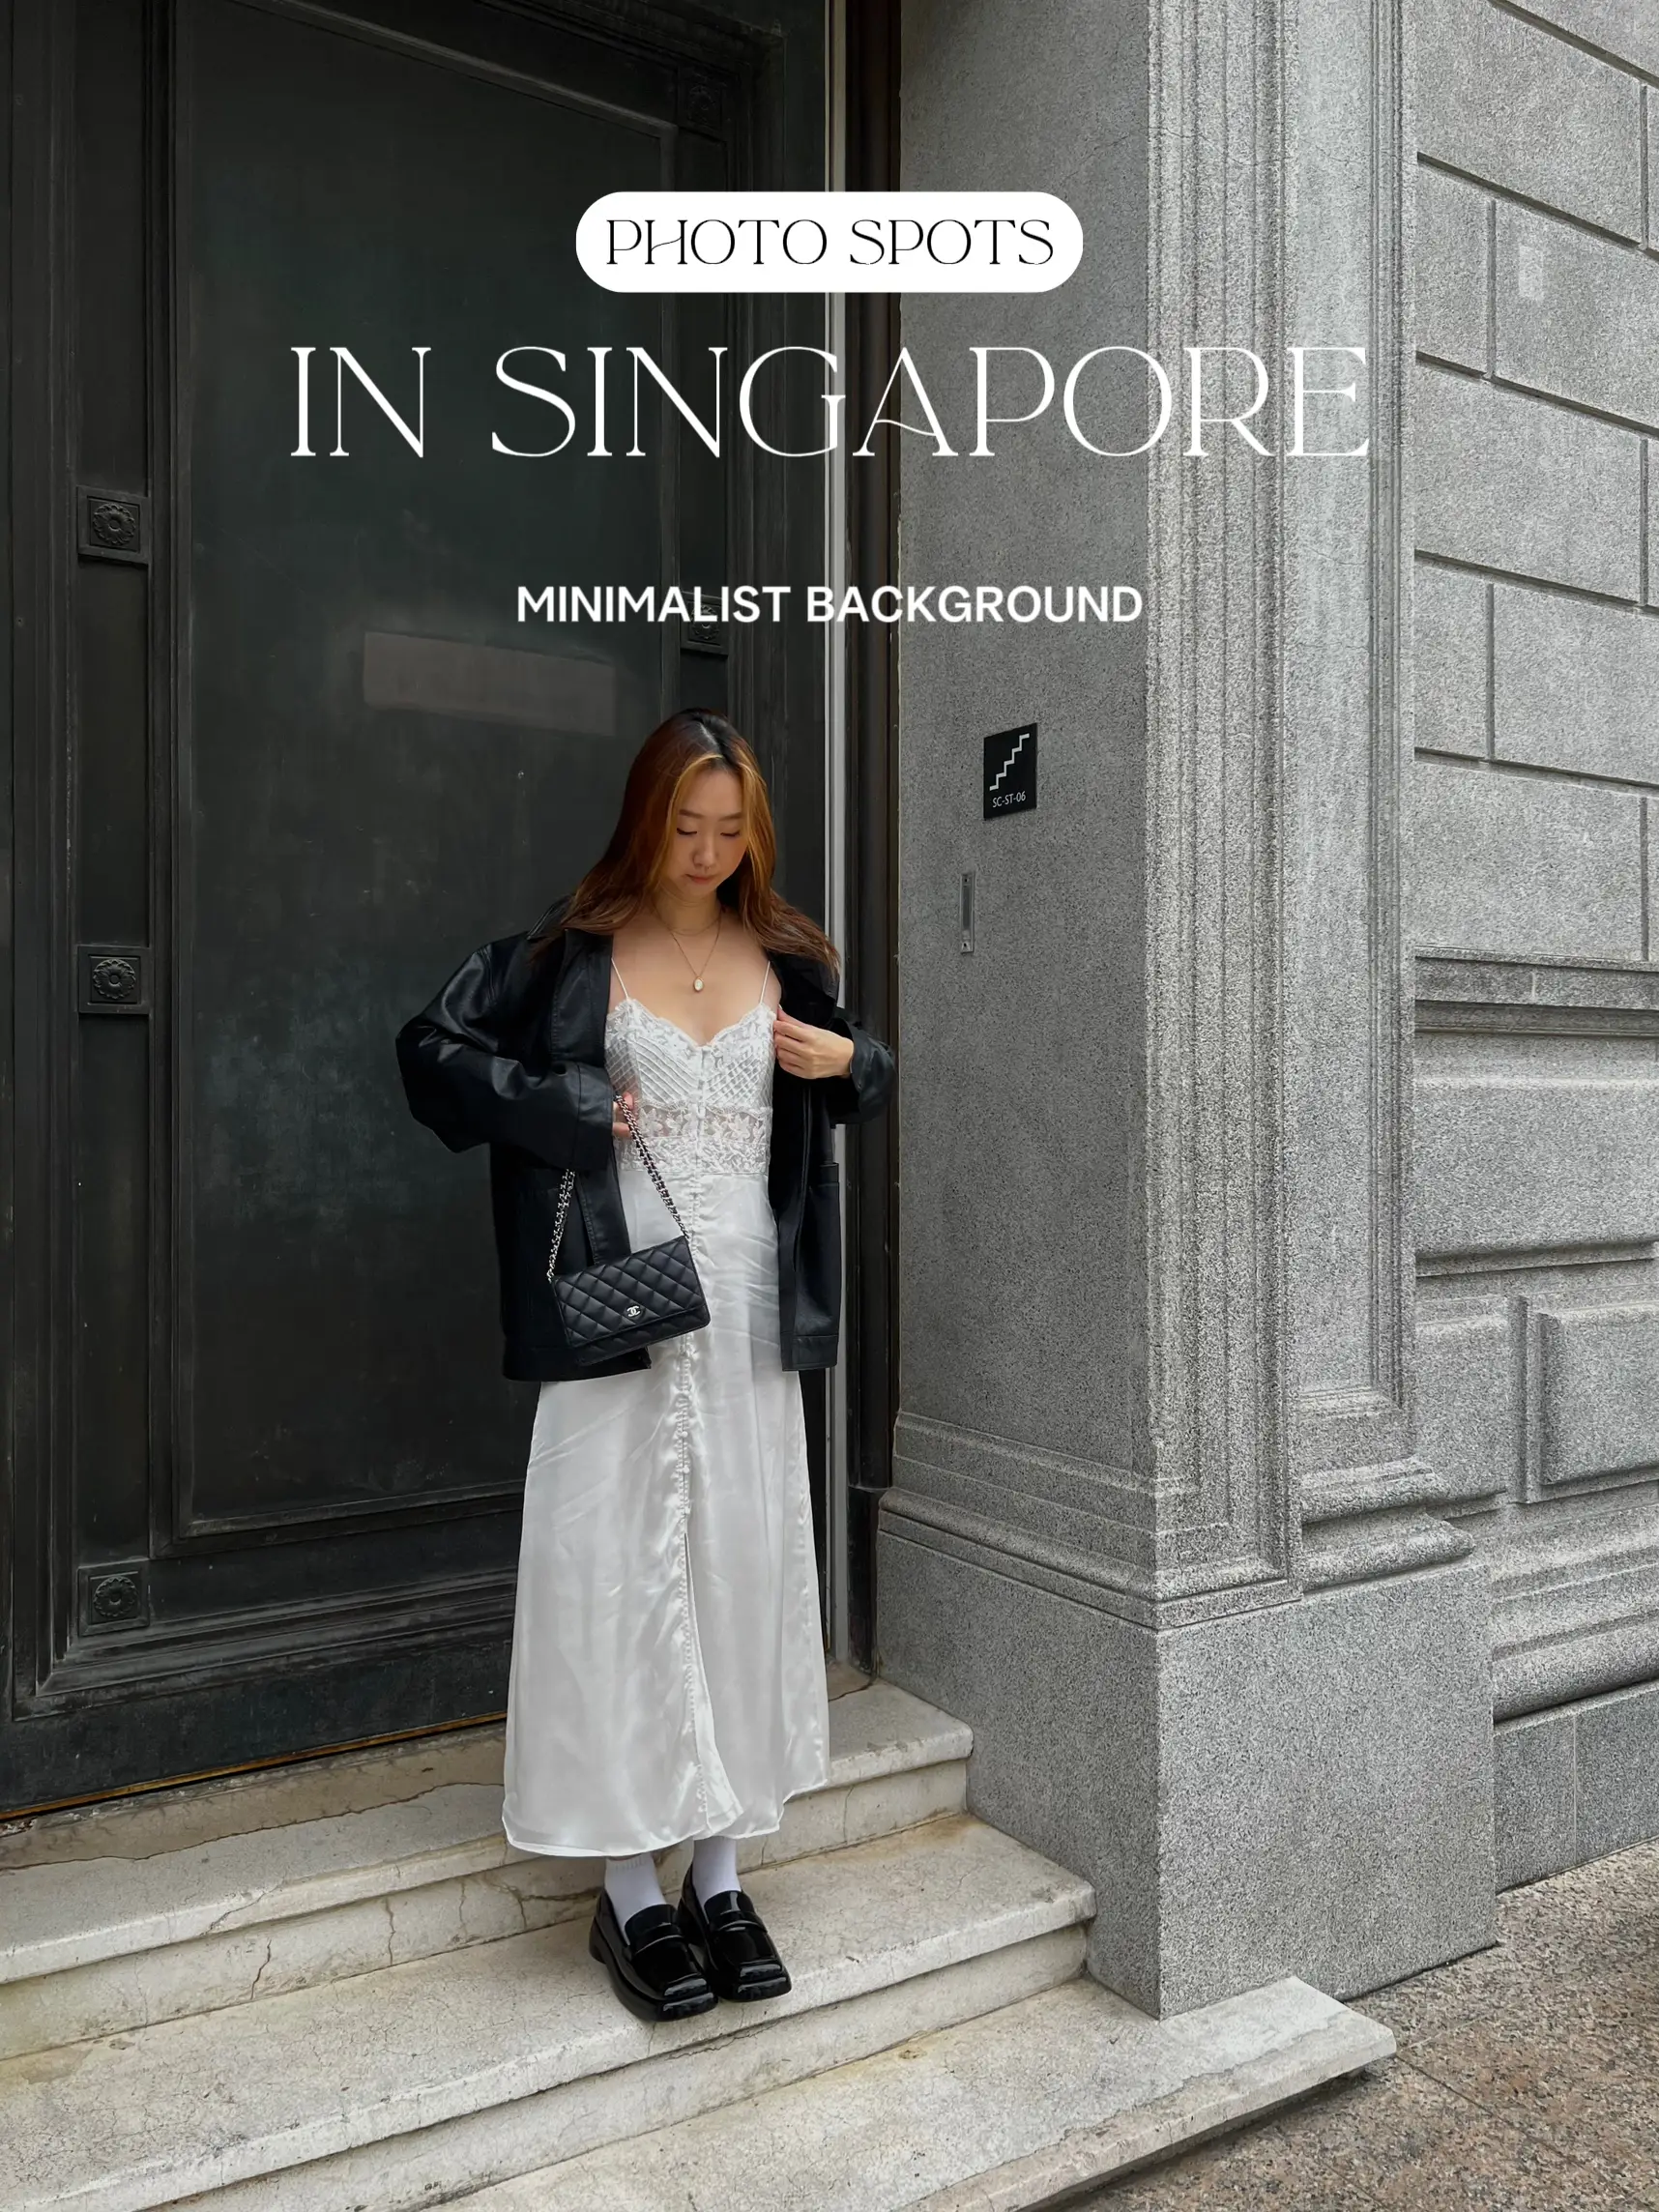 THE BEST PLACES TO TAKE PHOTOS IN SINGAPORE – KAROLINA MACKOVA